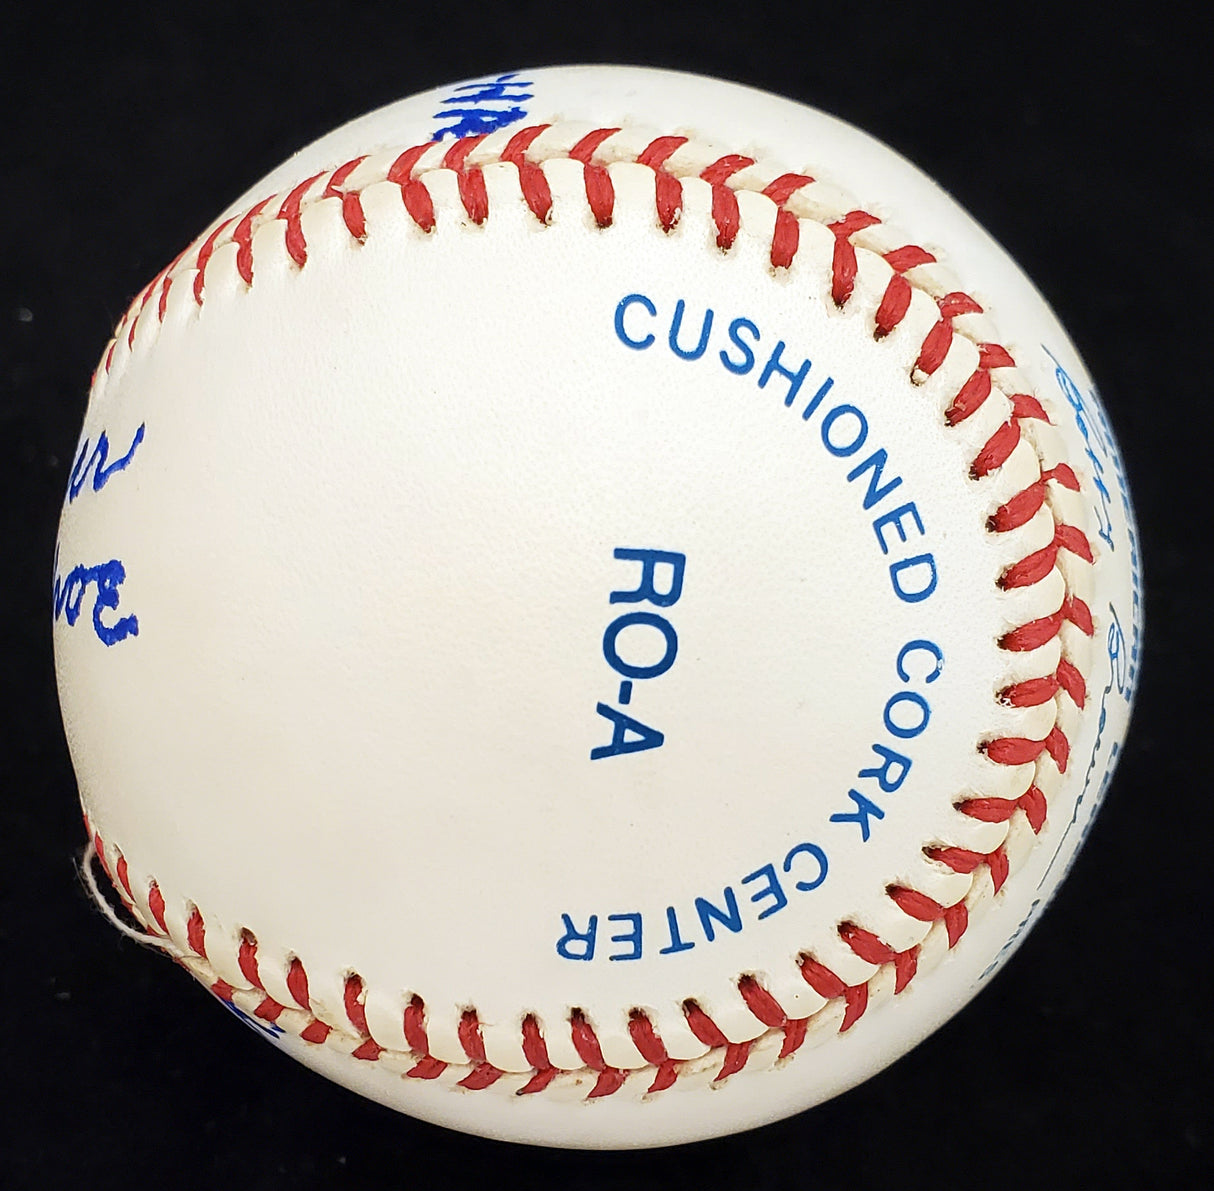 Joe Hauser Autographed Official AL Baseball Baltimore Orioles "Unser Choe" PSA/DNA #H31693